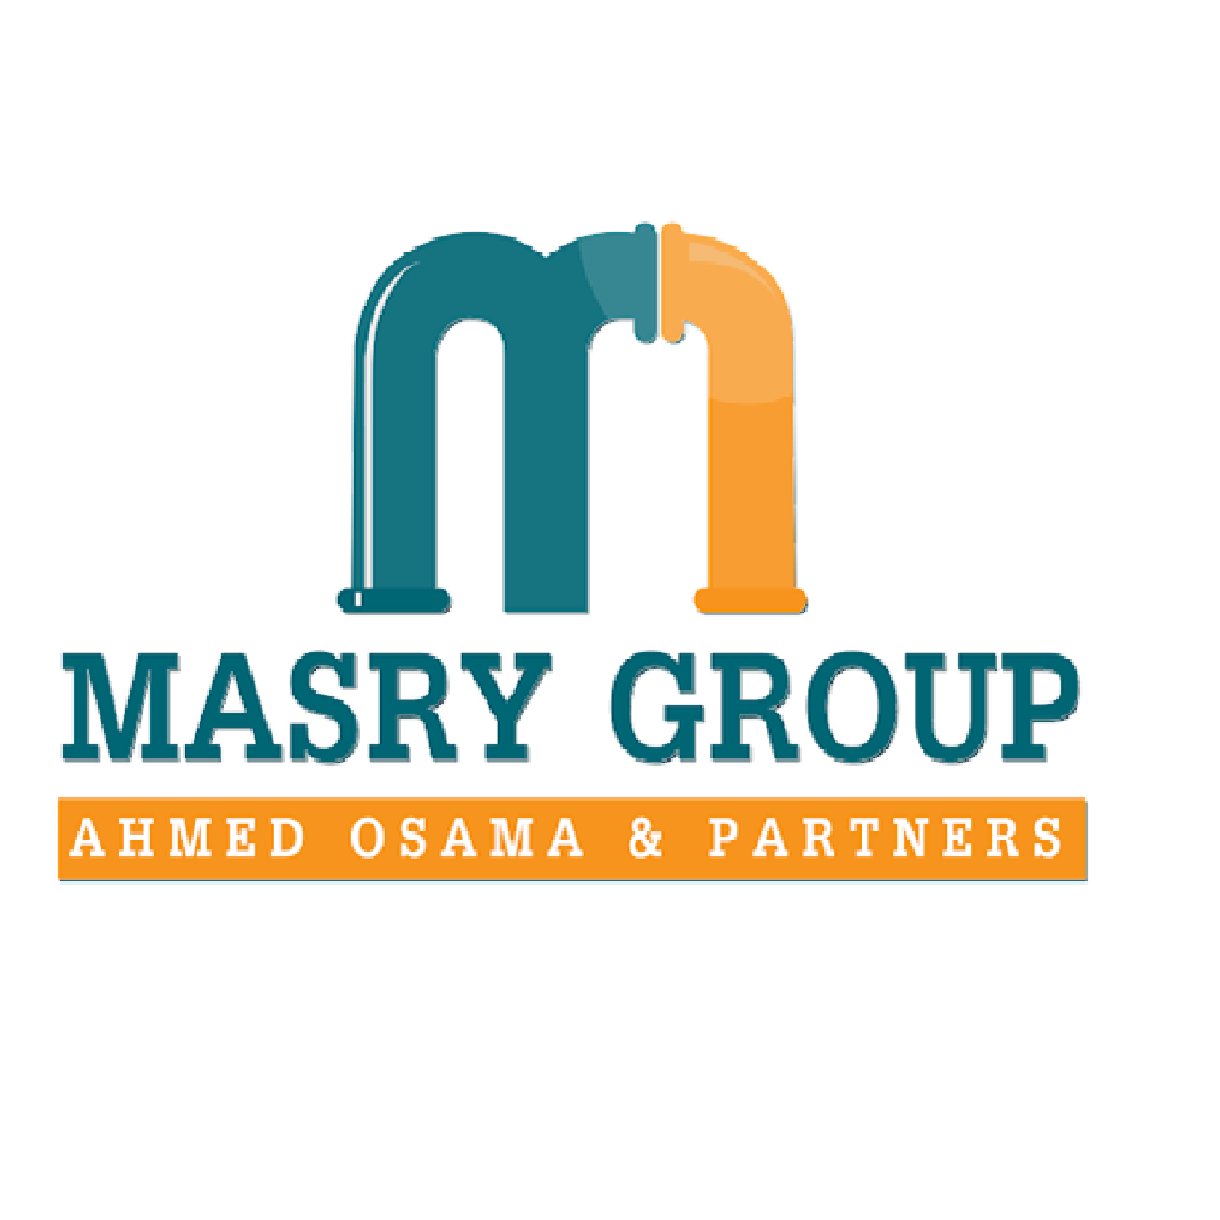 ElMasry Group